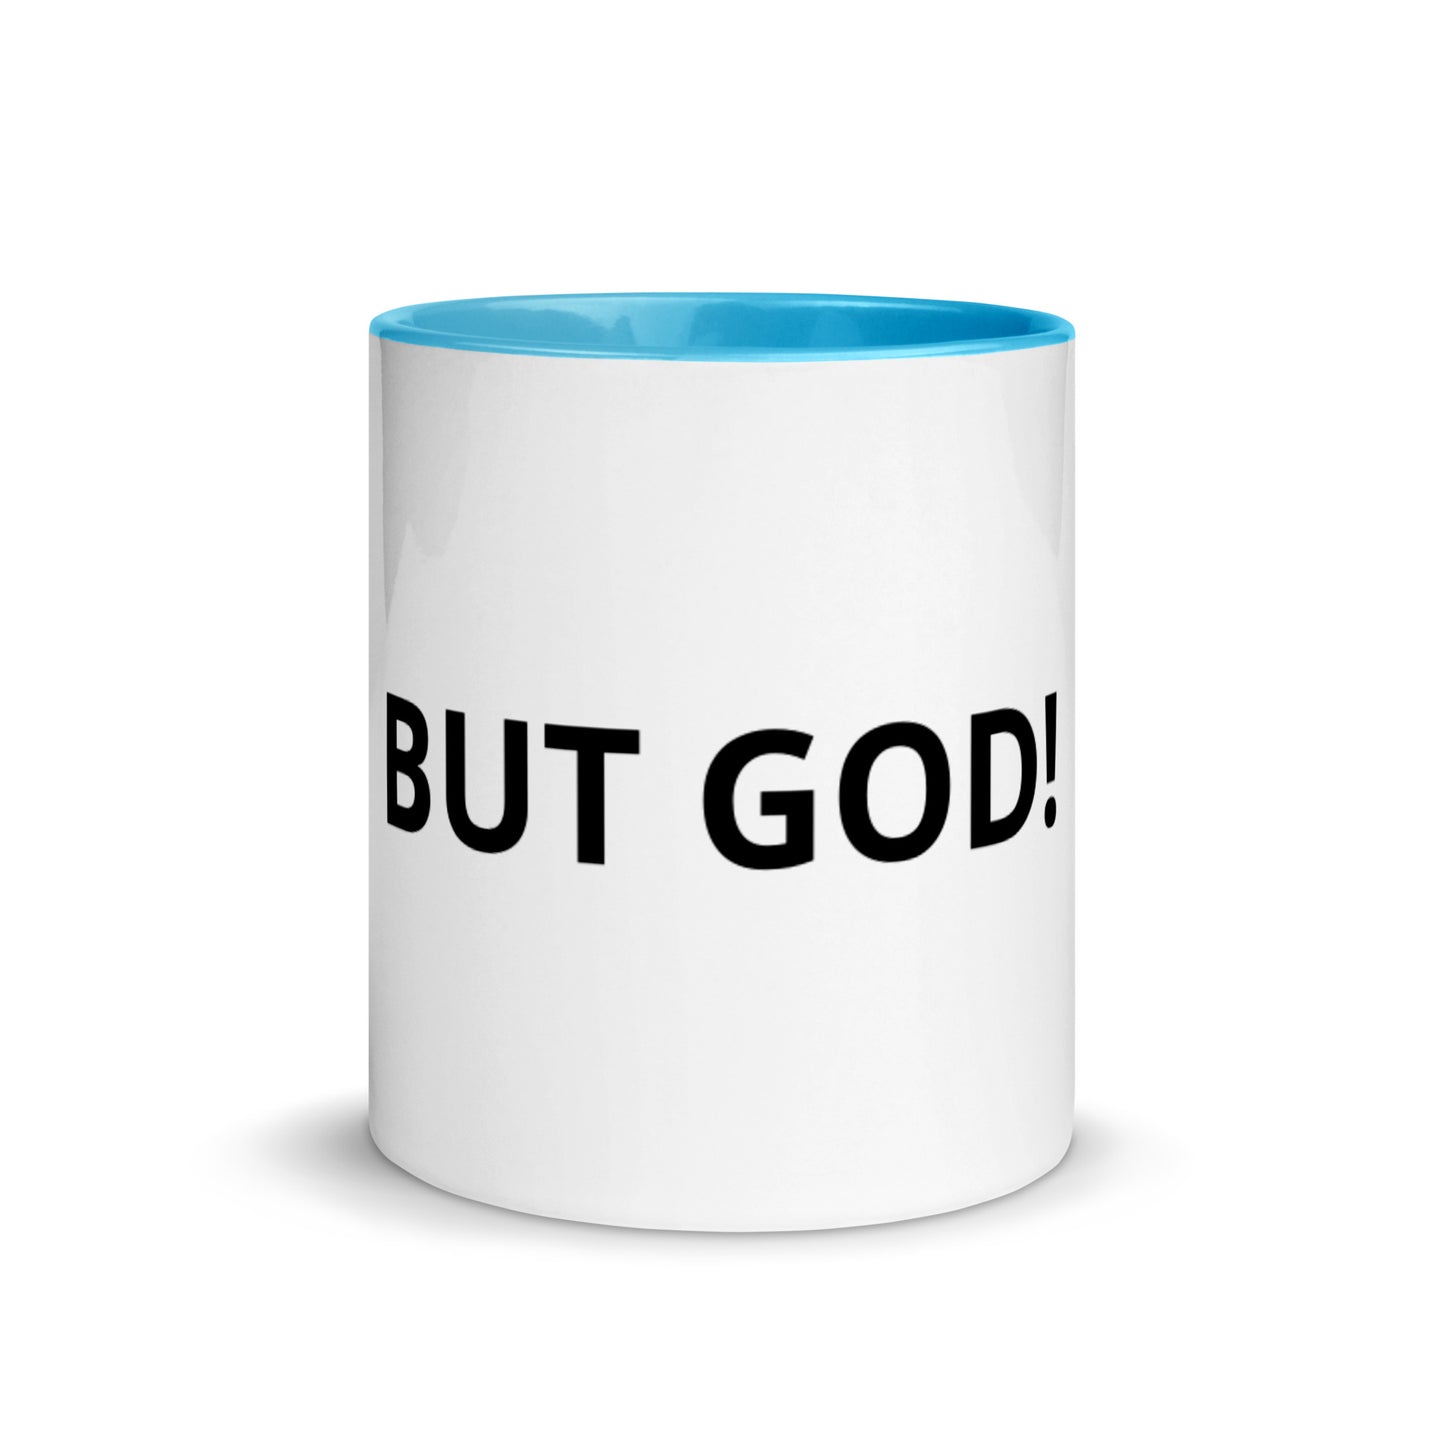 But God! White Ceramic Mug with Color Inside